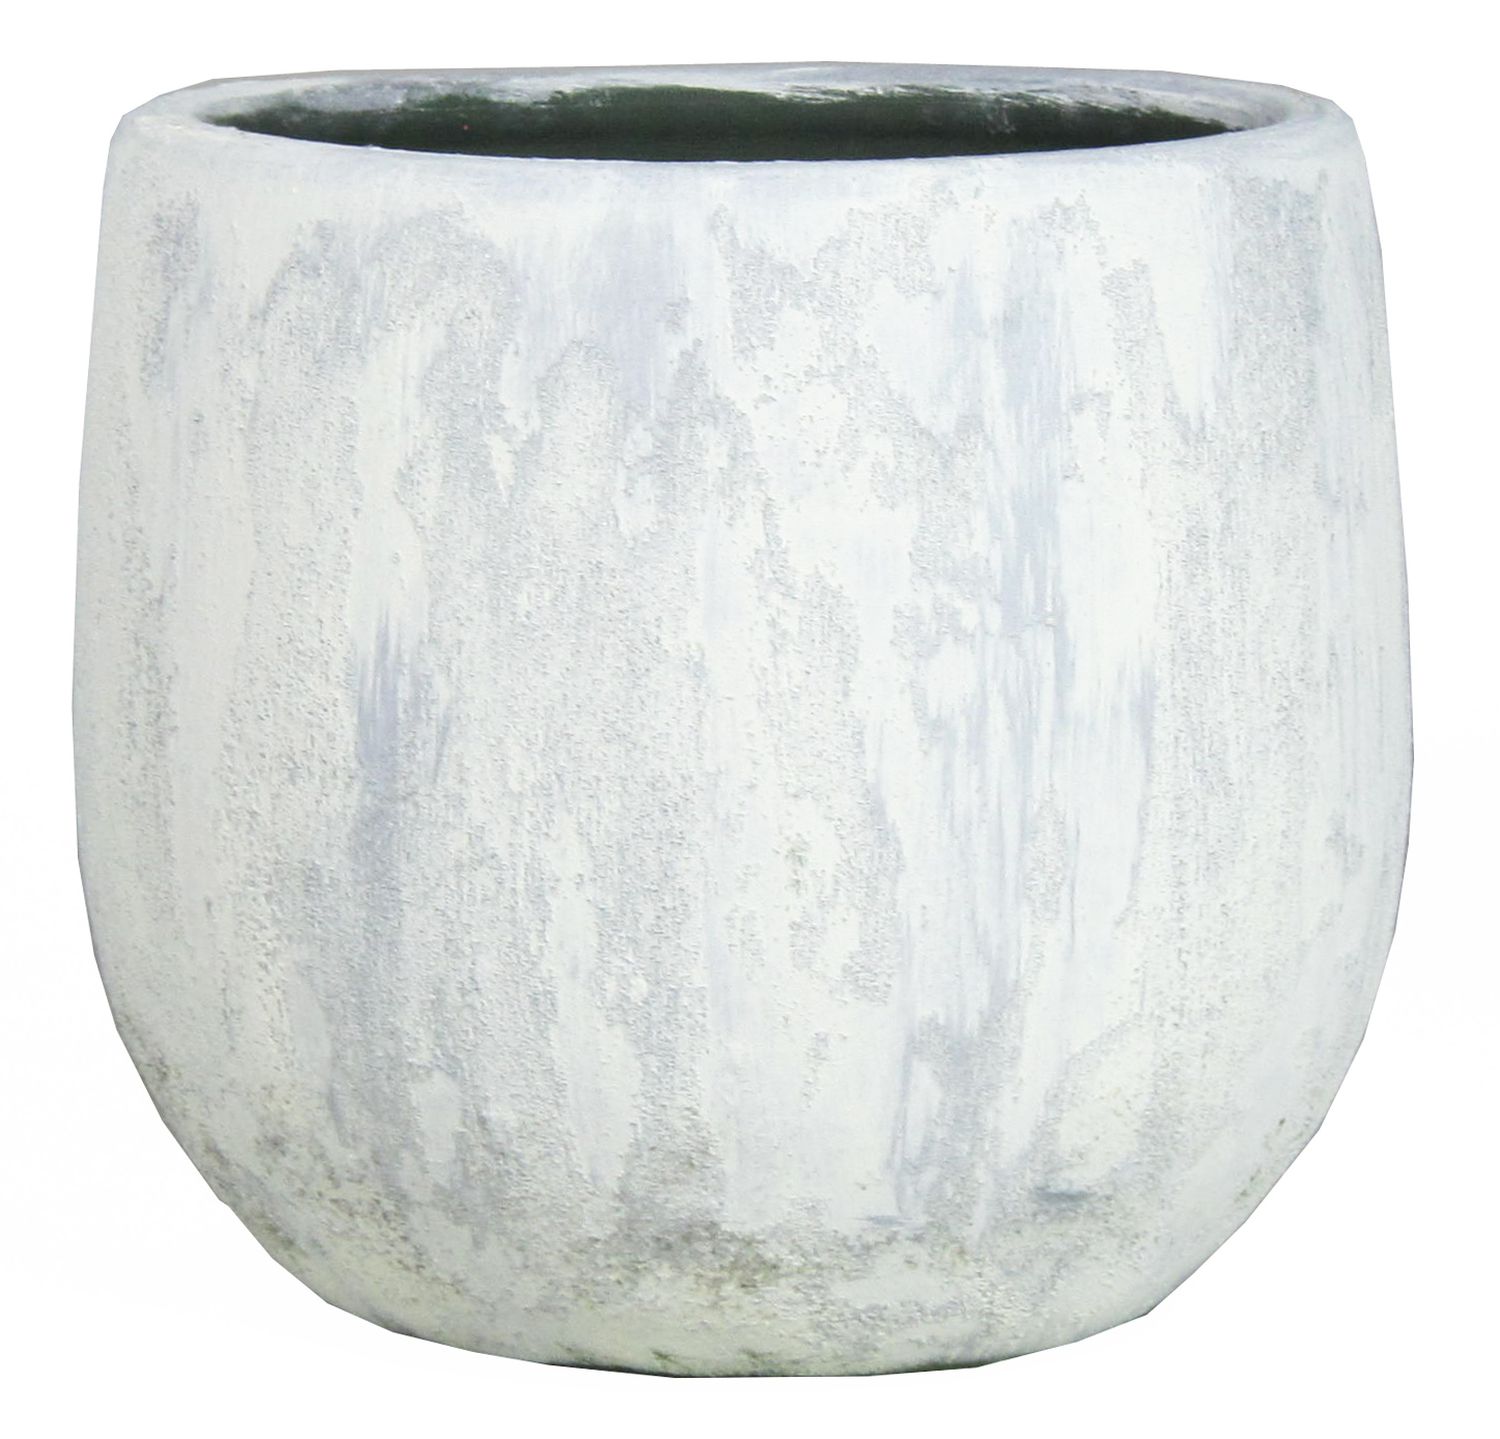 Keramik Übertopf MORTAZA mit Maserung, grau-weiß-eisblau, 14cm, Ø16cm